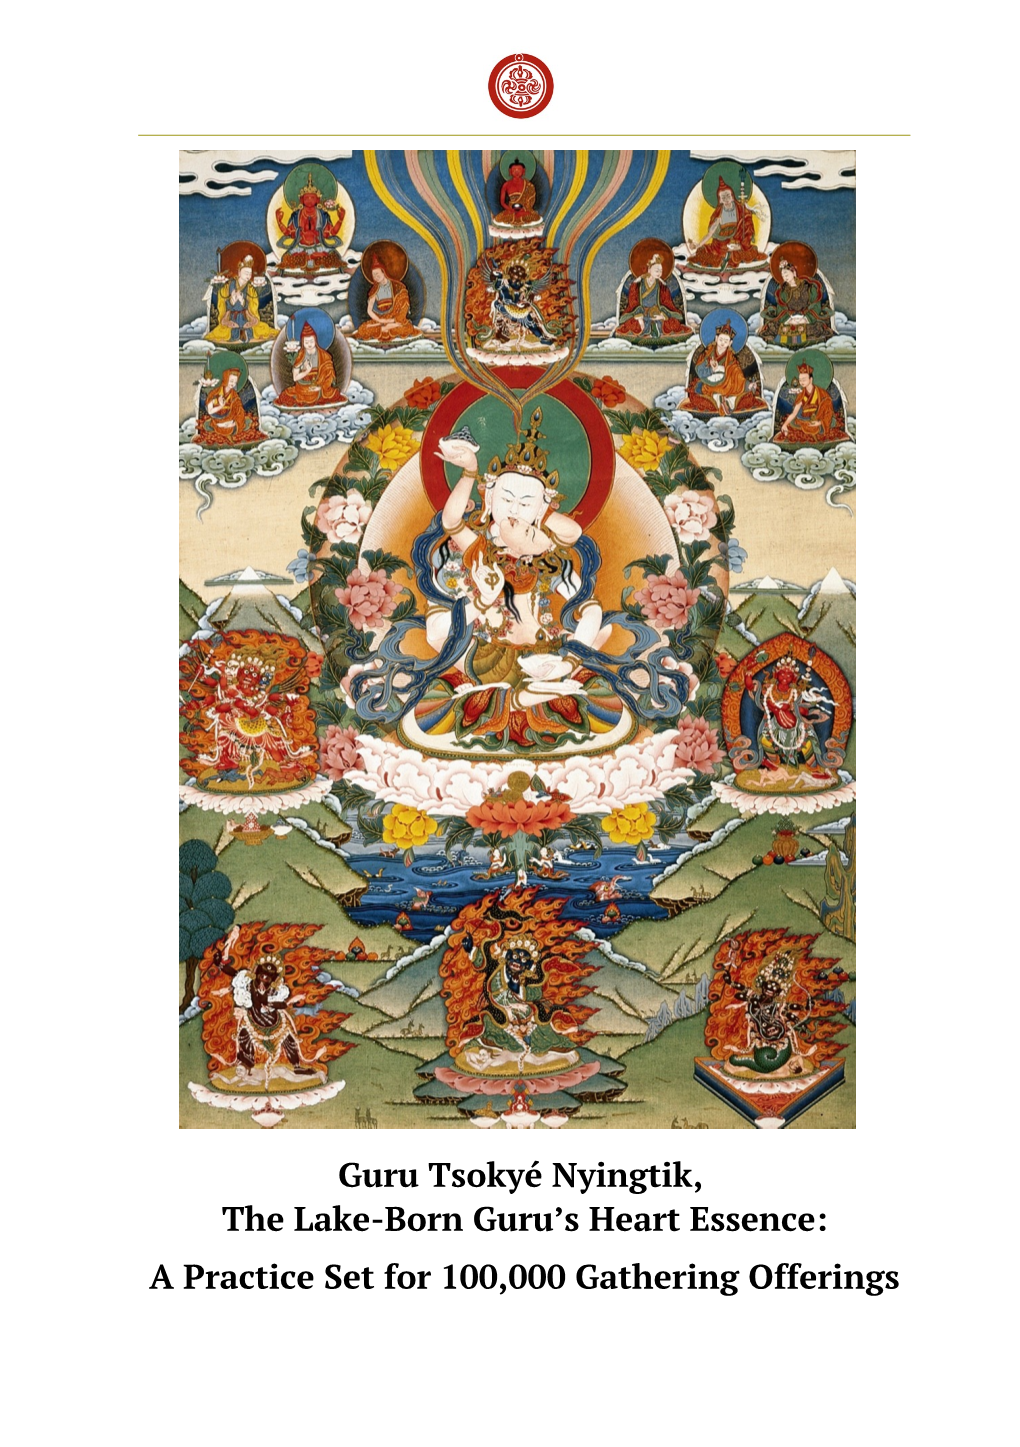 Guru Tsokyé Nyingtik, the Lake-Born Guru's Heart Essence